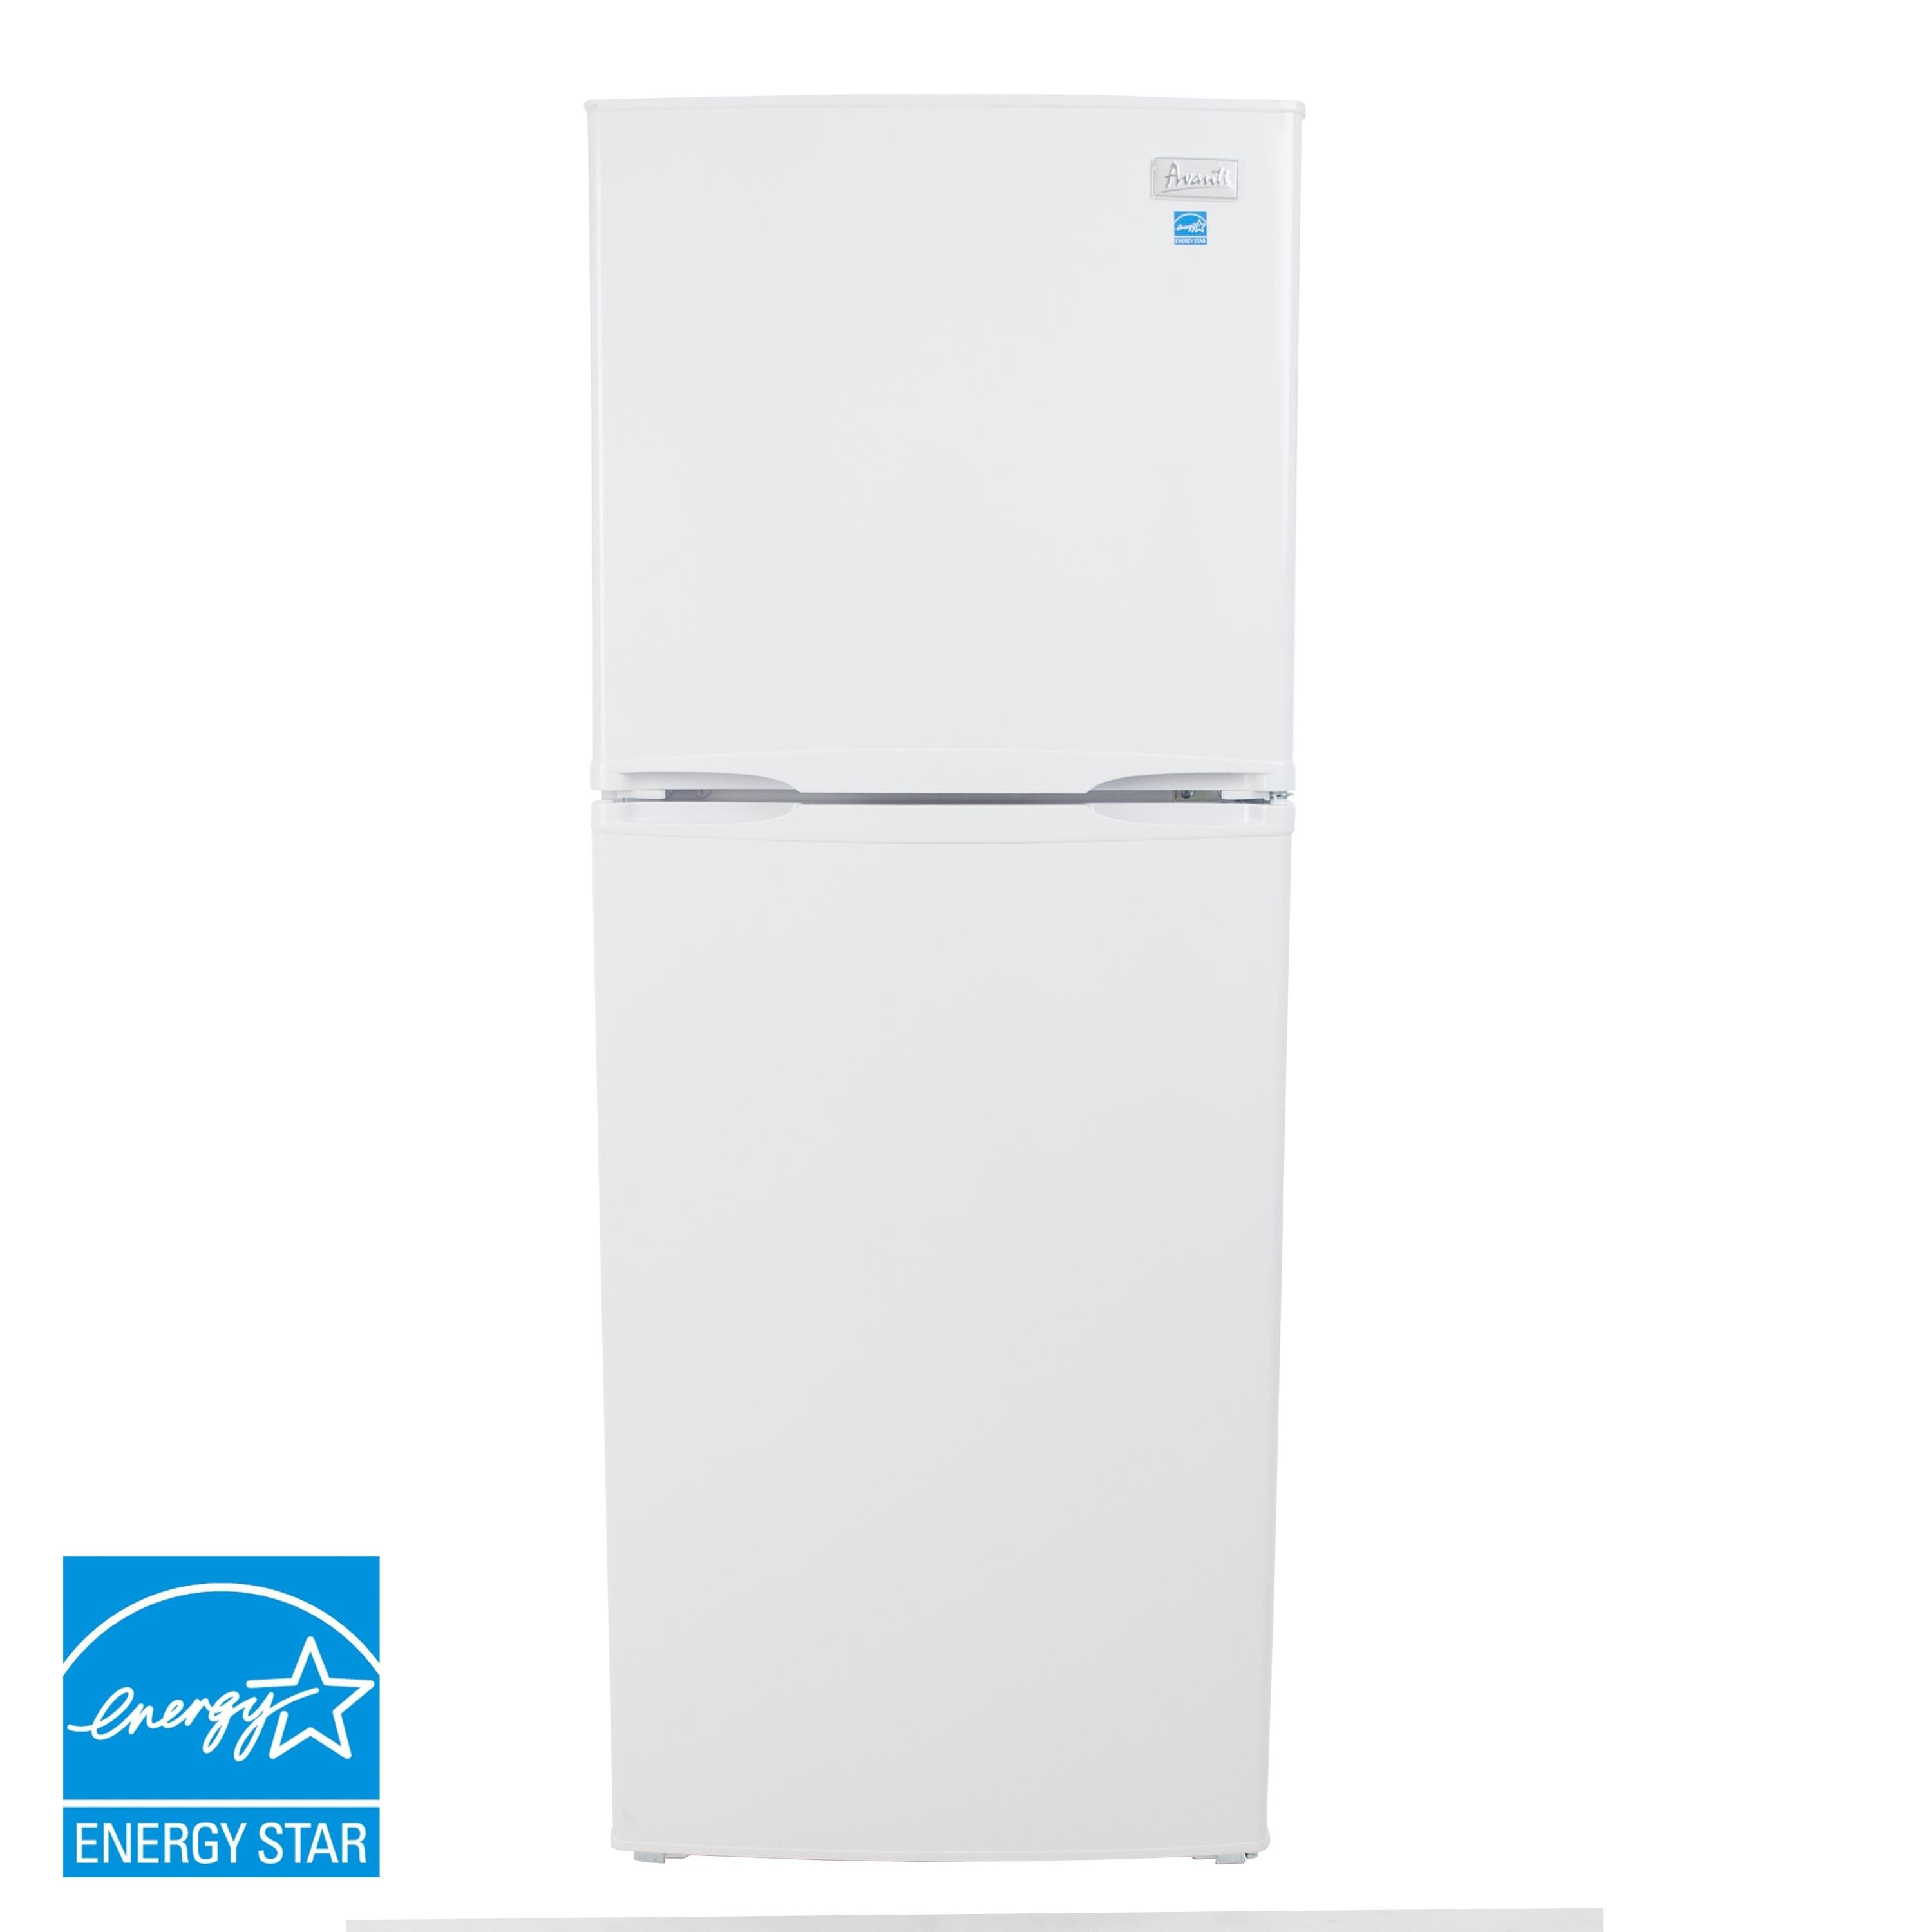 Magic Cool 7.4 Cu. ft. Apartment Size Refrigerator - White